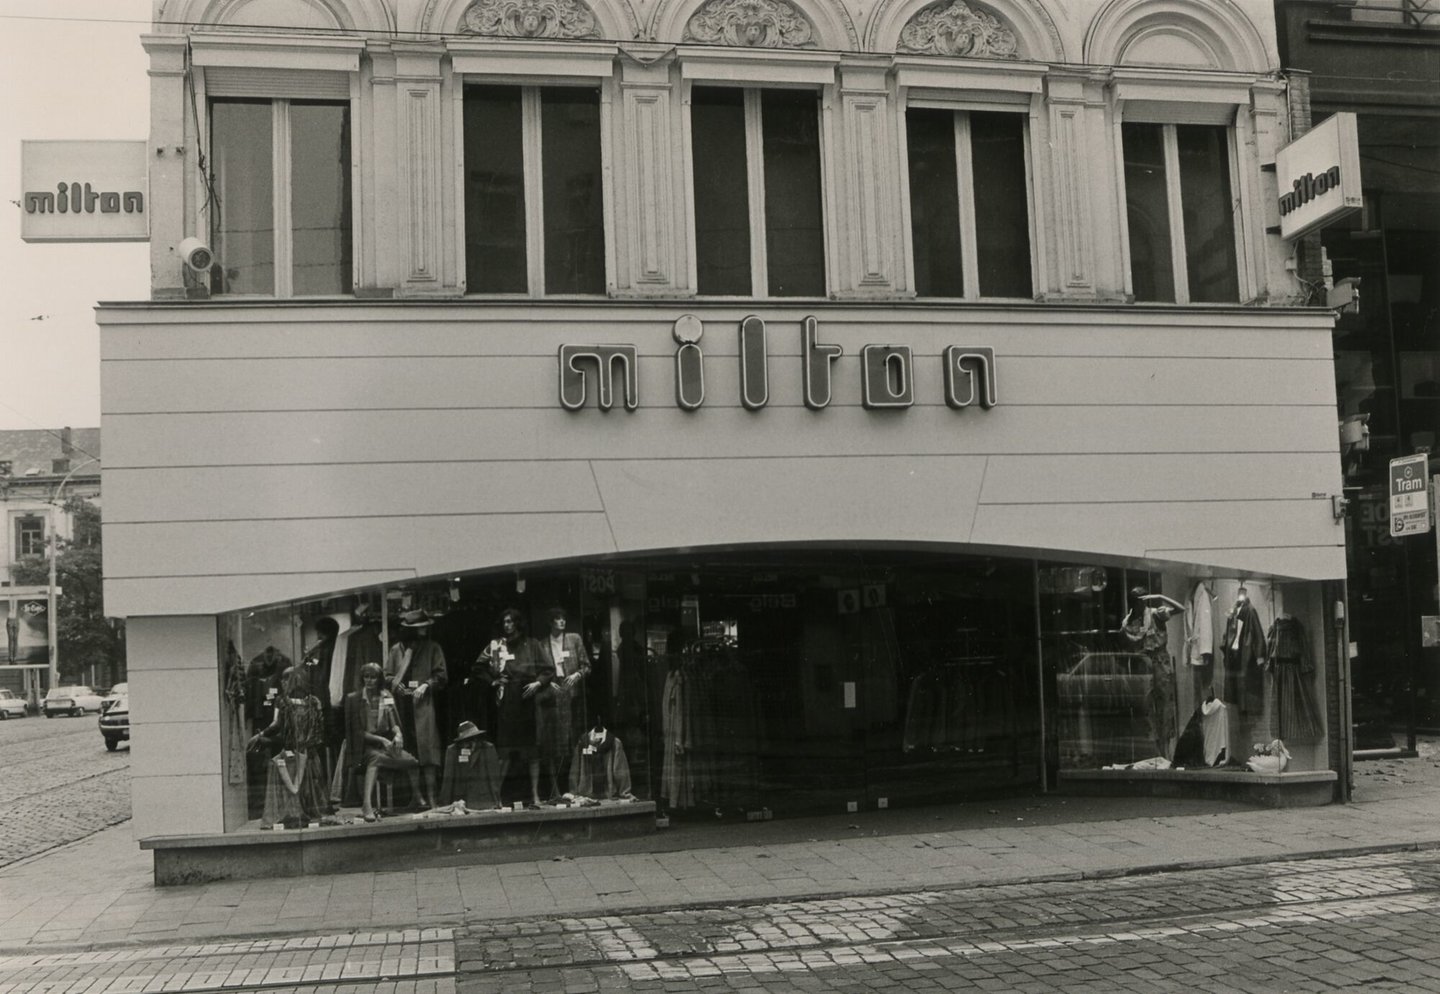 Etalage van kledingwinkel Milton in Gent